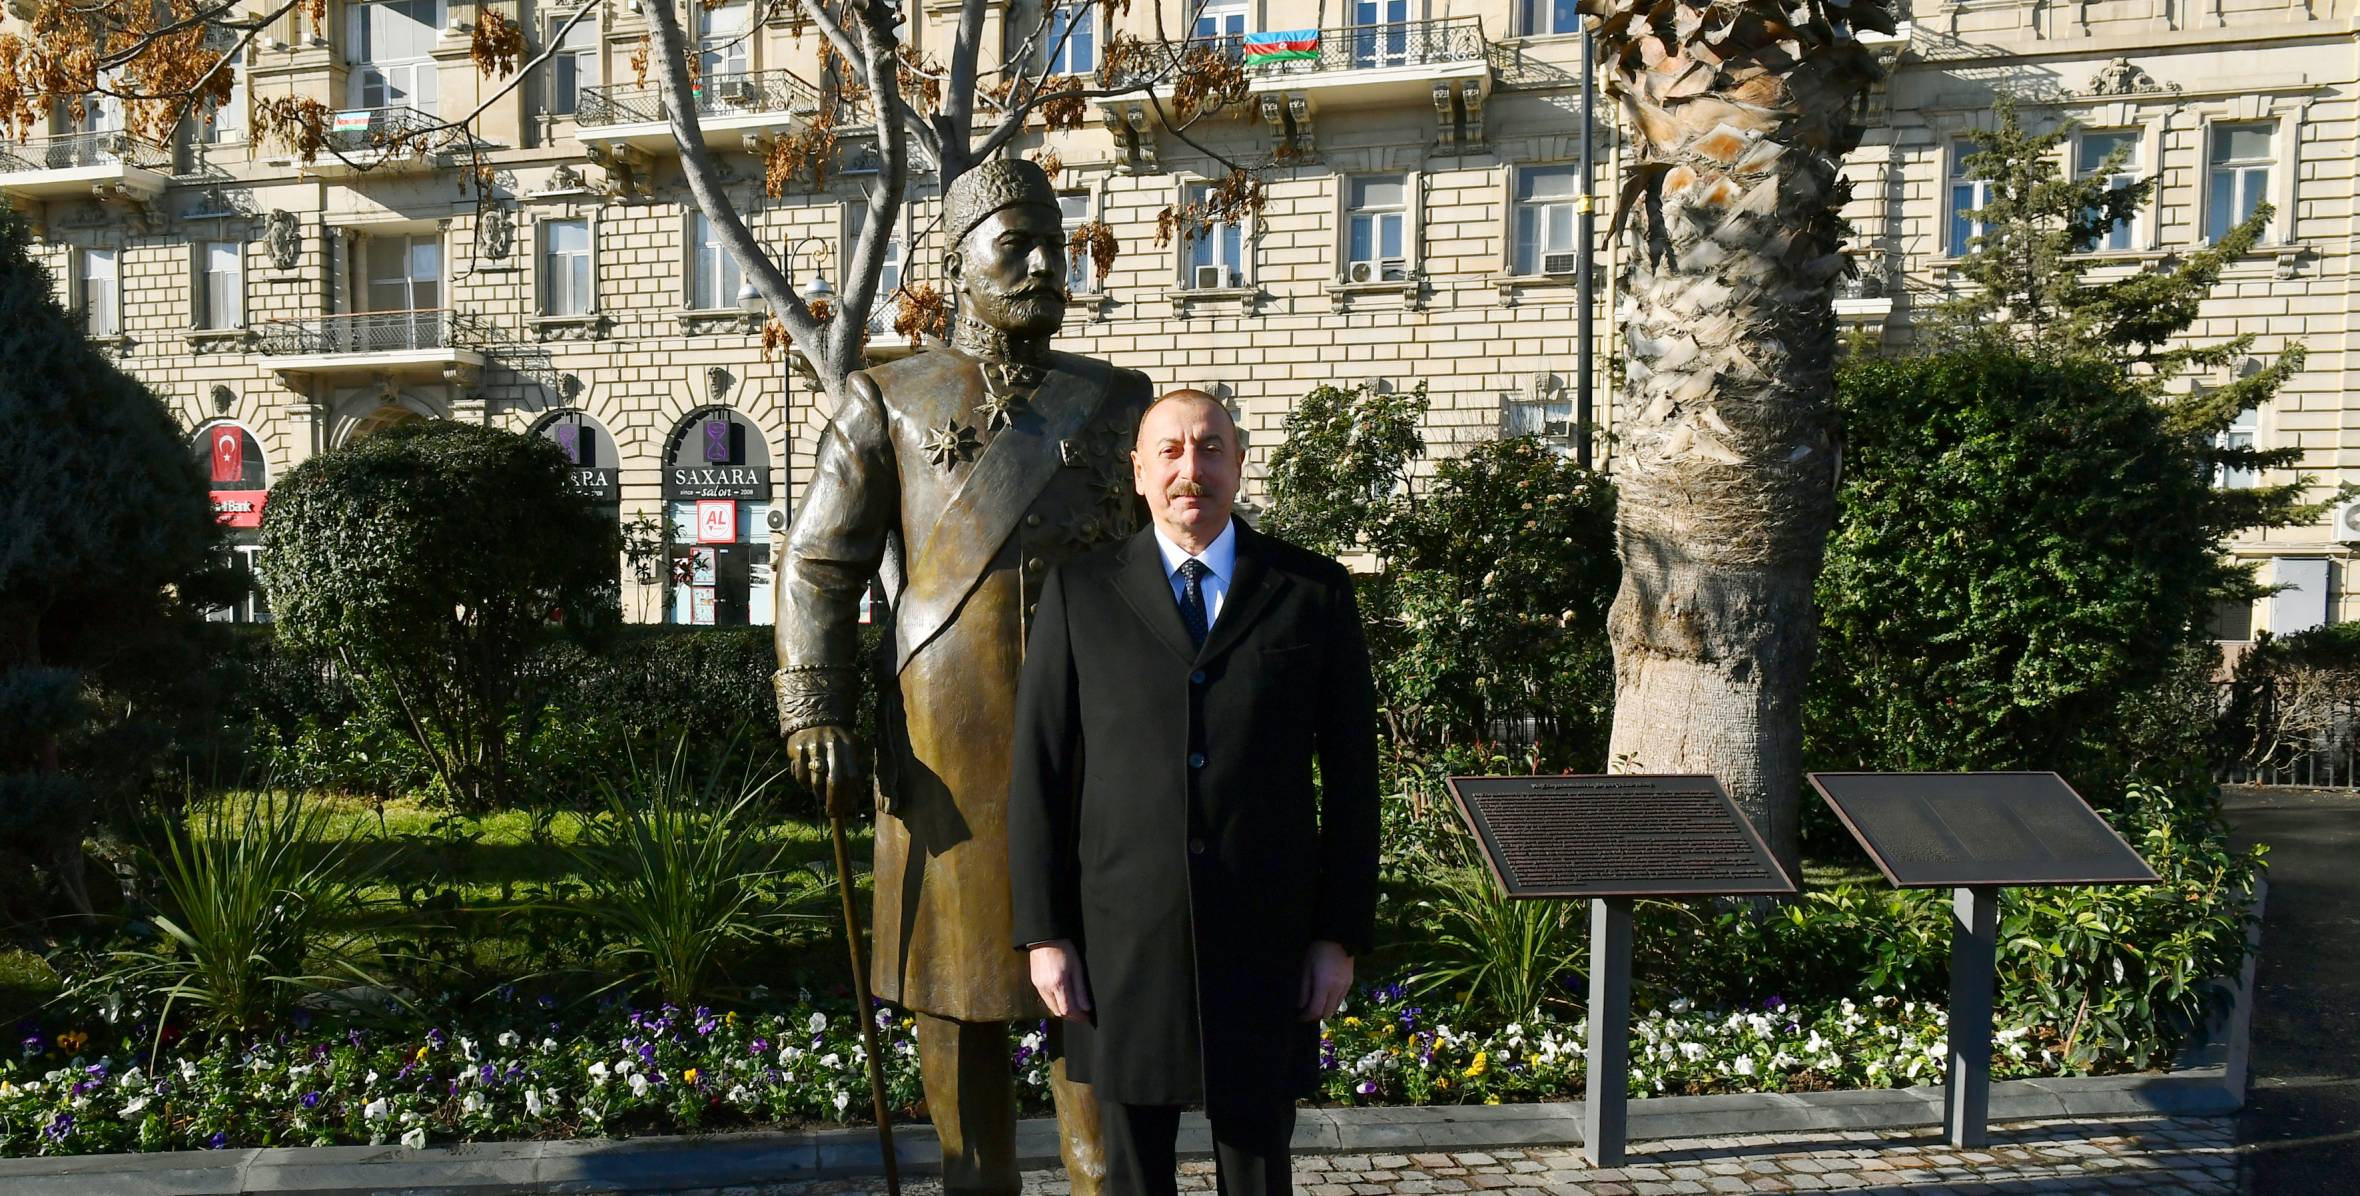 Ilham Aliyev unveiled the monument to philanthropist Haji Zeynalabdin Taghiyev in Baku